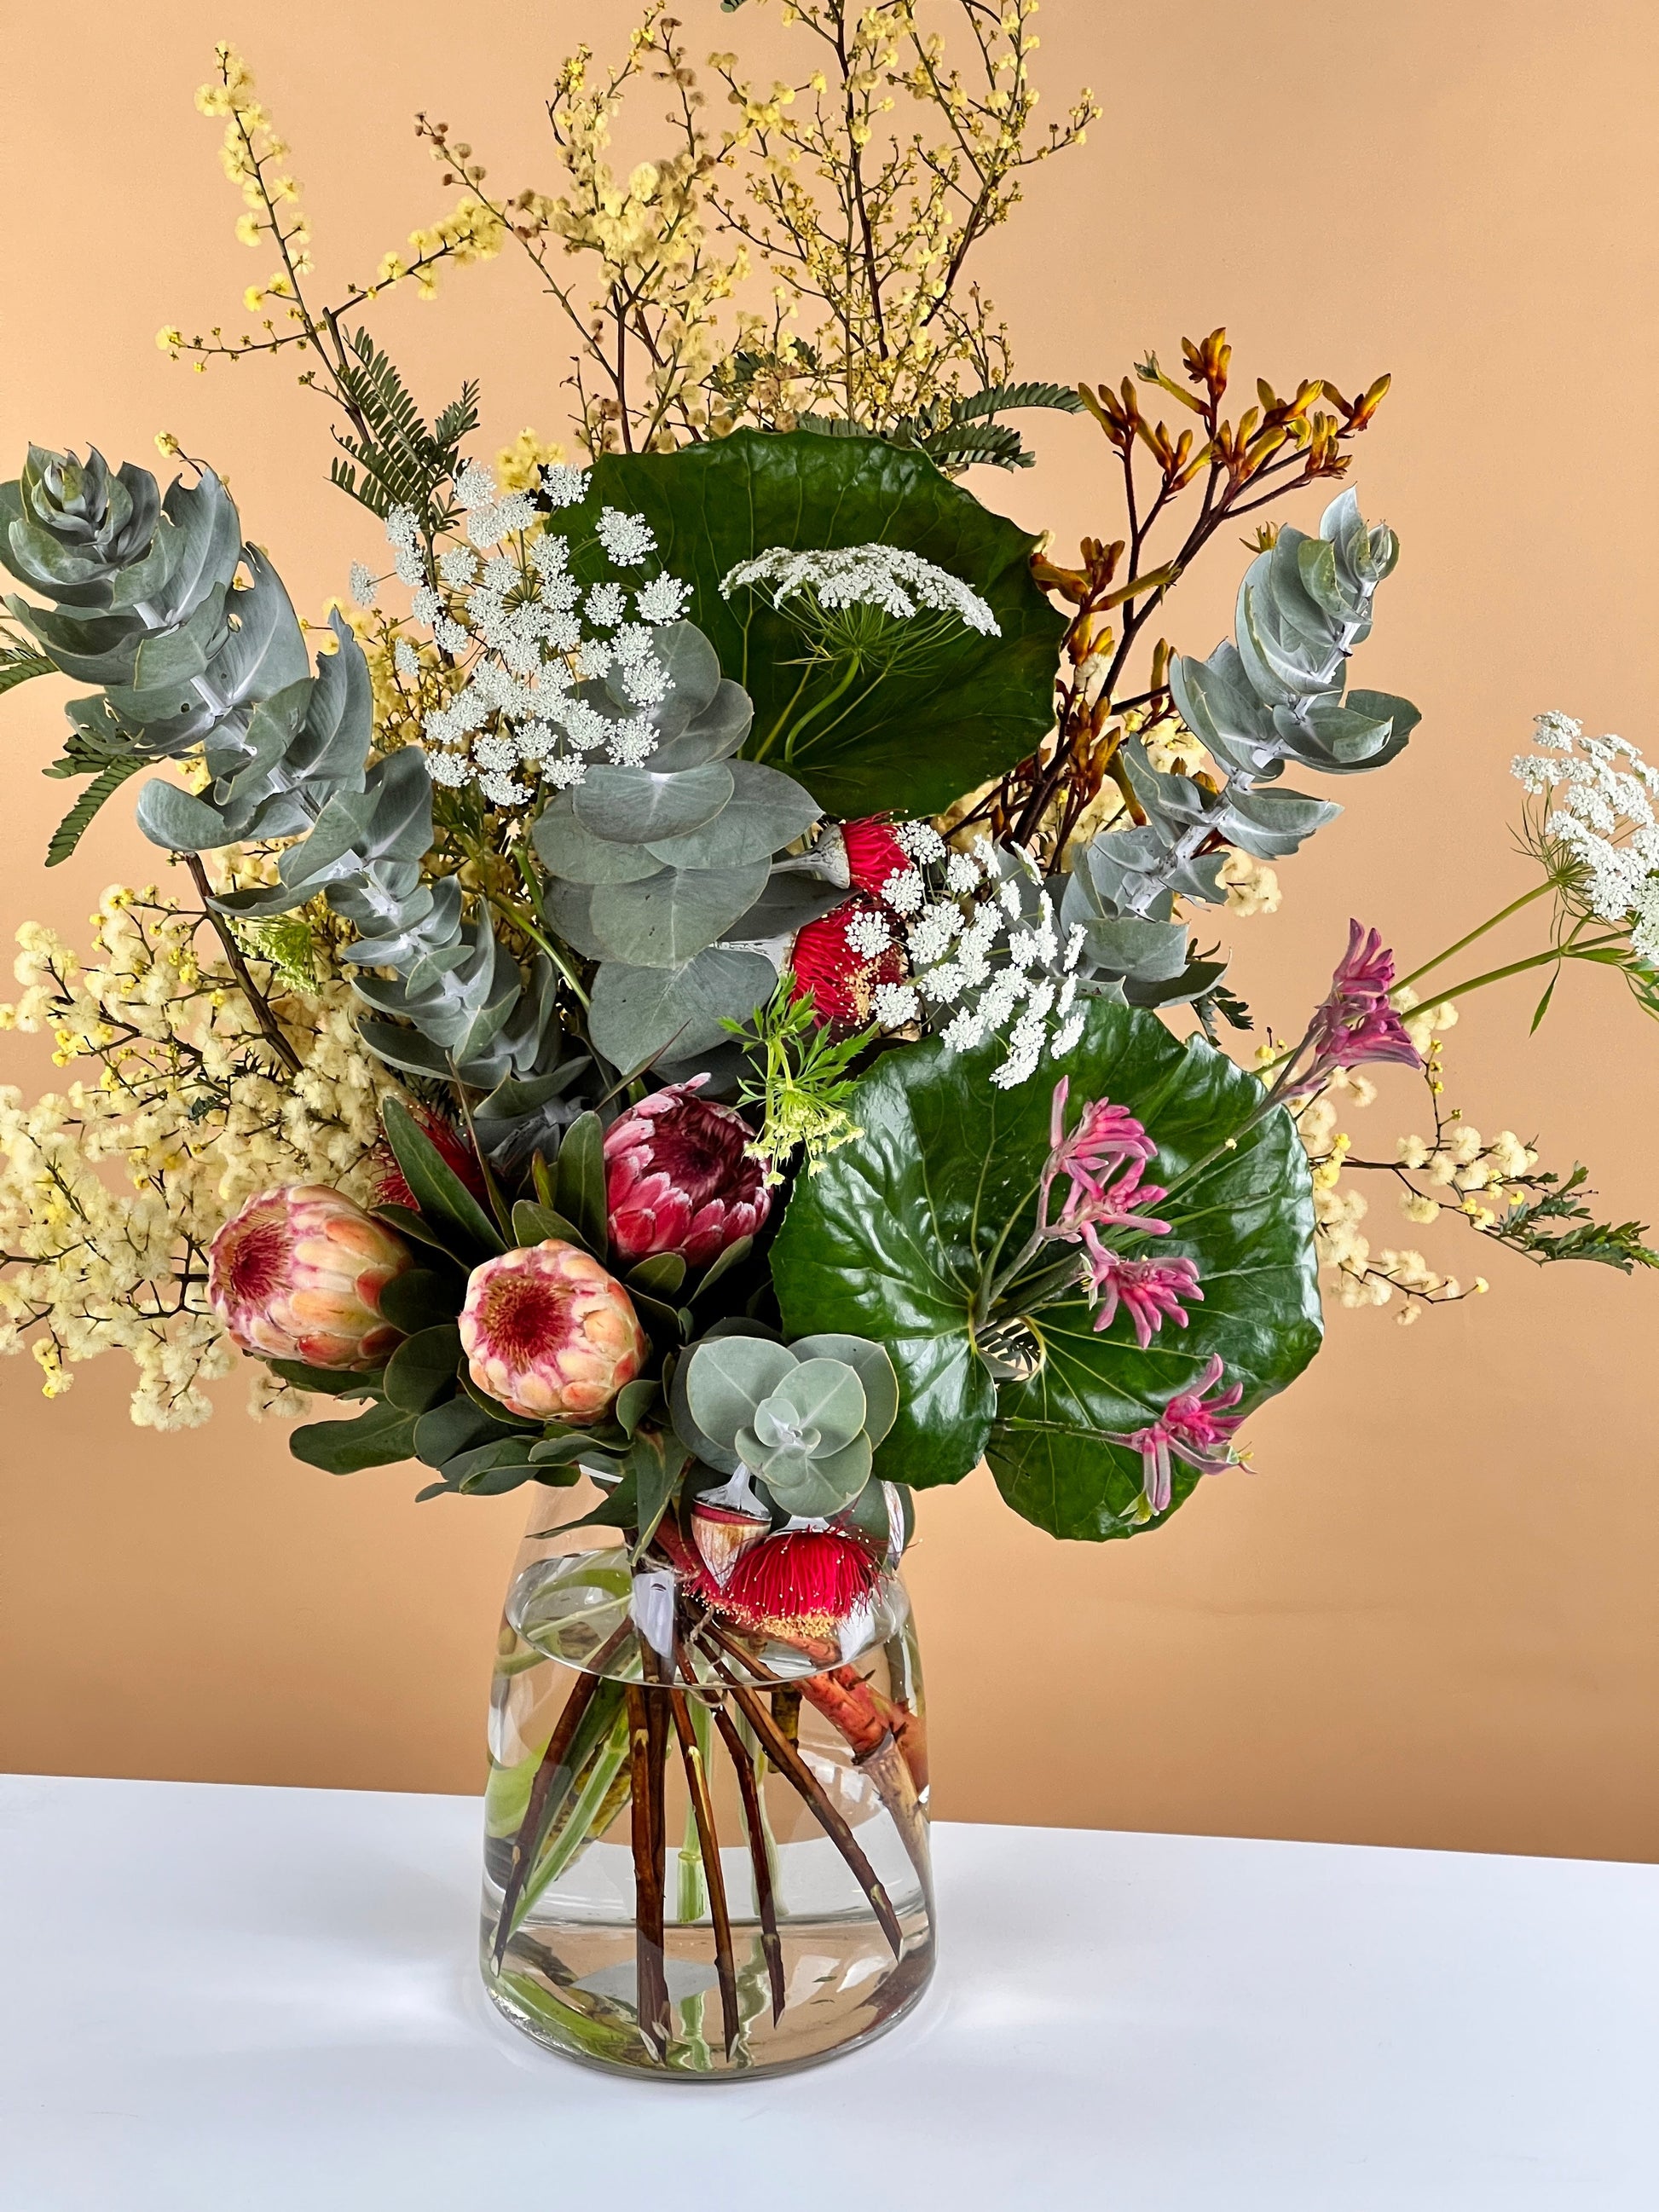 Wild Natives Bunch-Flower-Delivery-Gold-Coast-Florist-Flowers Gold Coast-Gorgeous Glass Vase-Breathtaking-https://www.flowersgoldcoast.com.au-best-florist